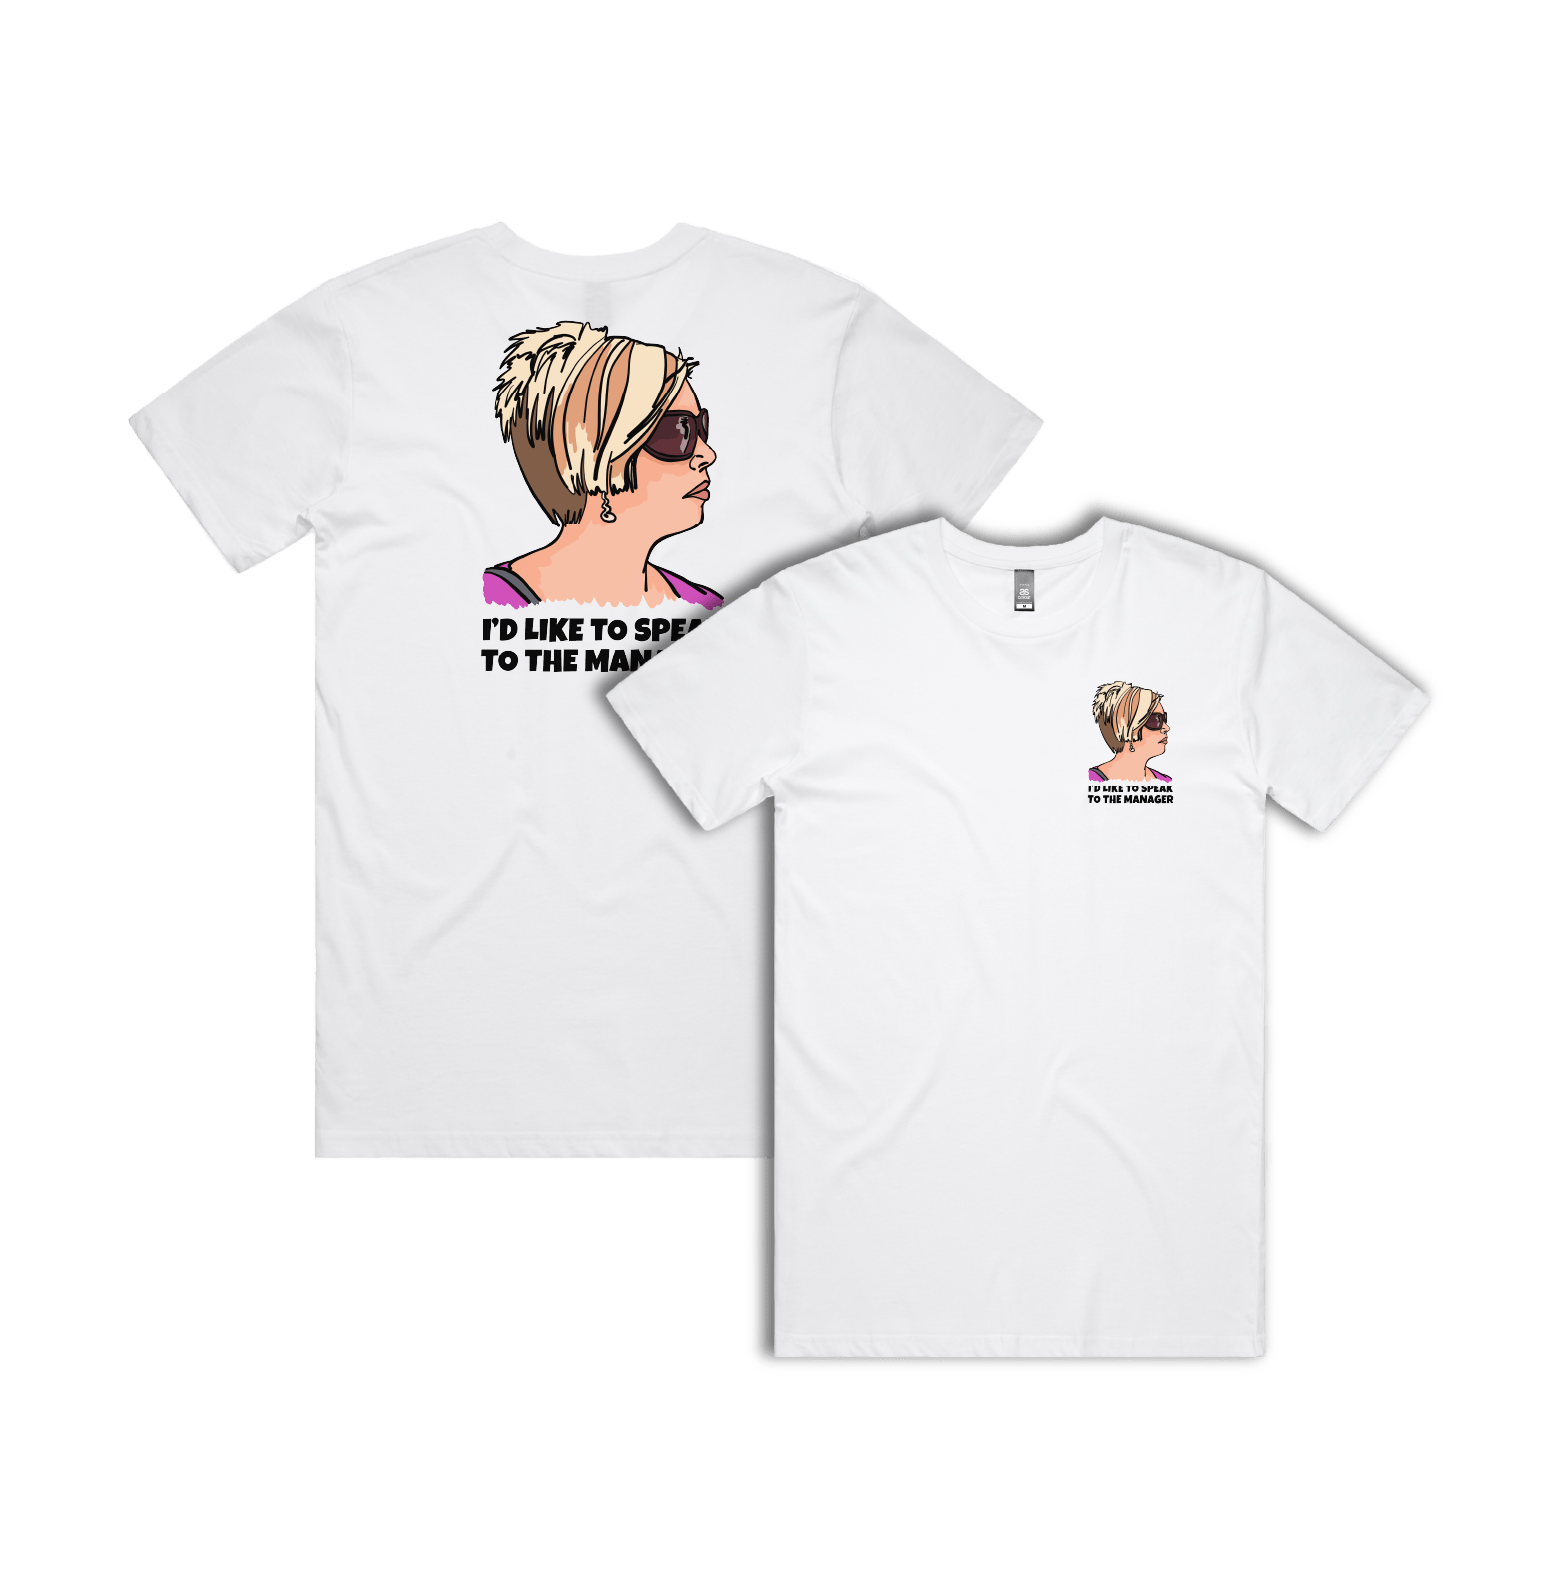 S / White / Small Front & Large Back Design Unleash the Karen 😤 - Men's T Shirt